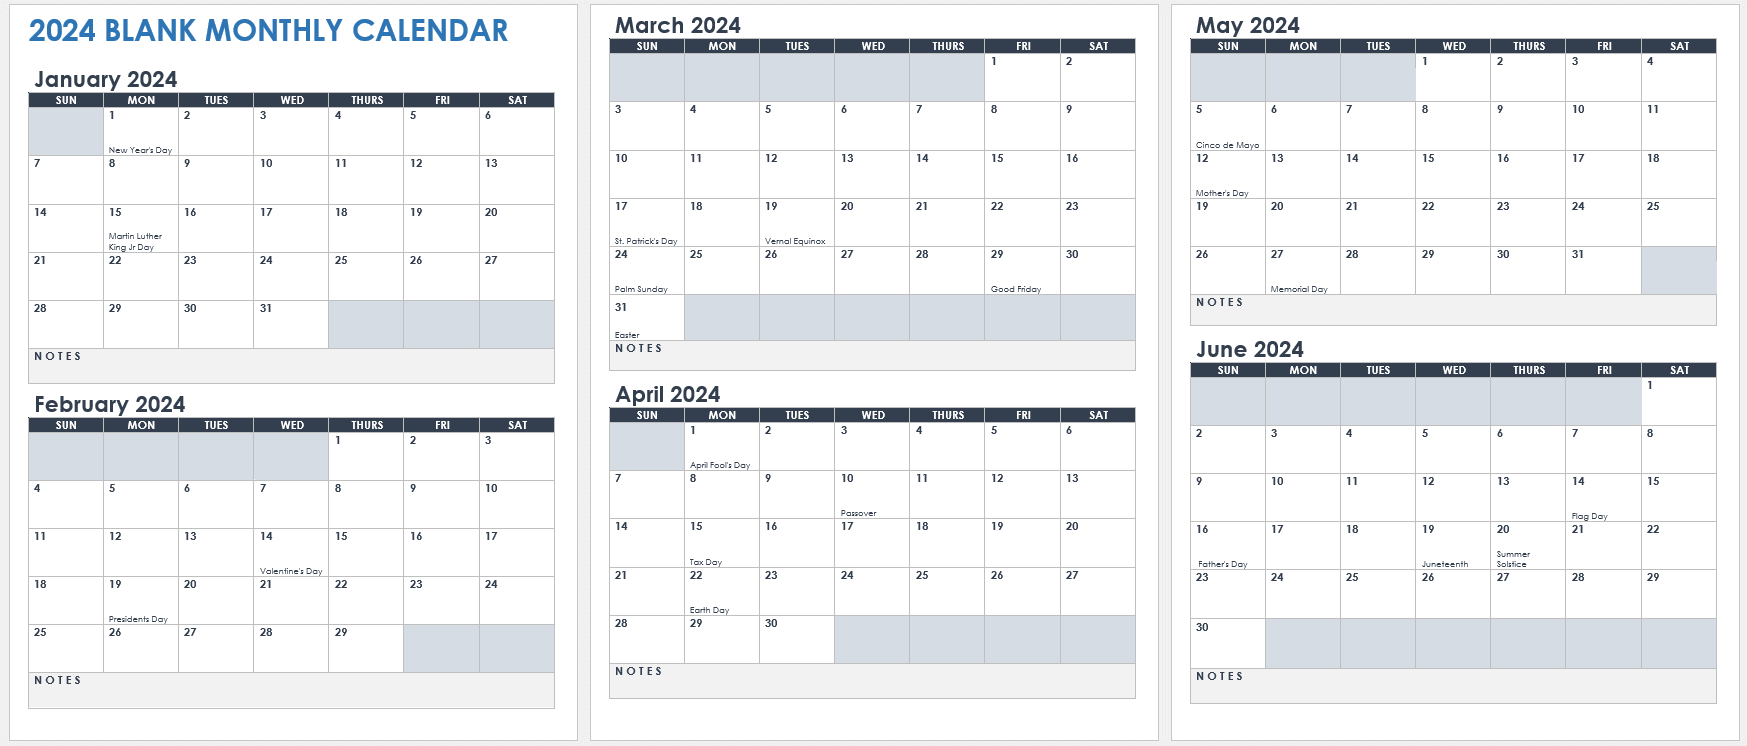 2024 Blank Monthly Calendar Template